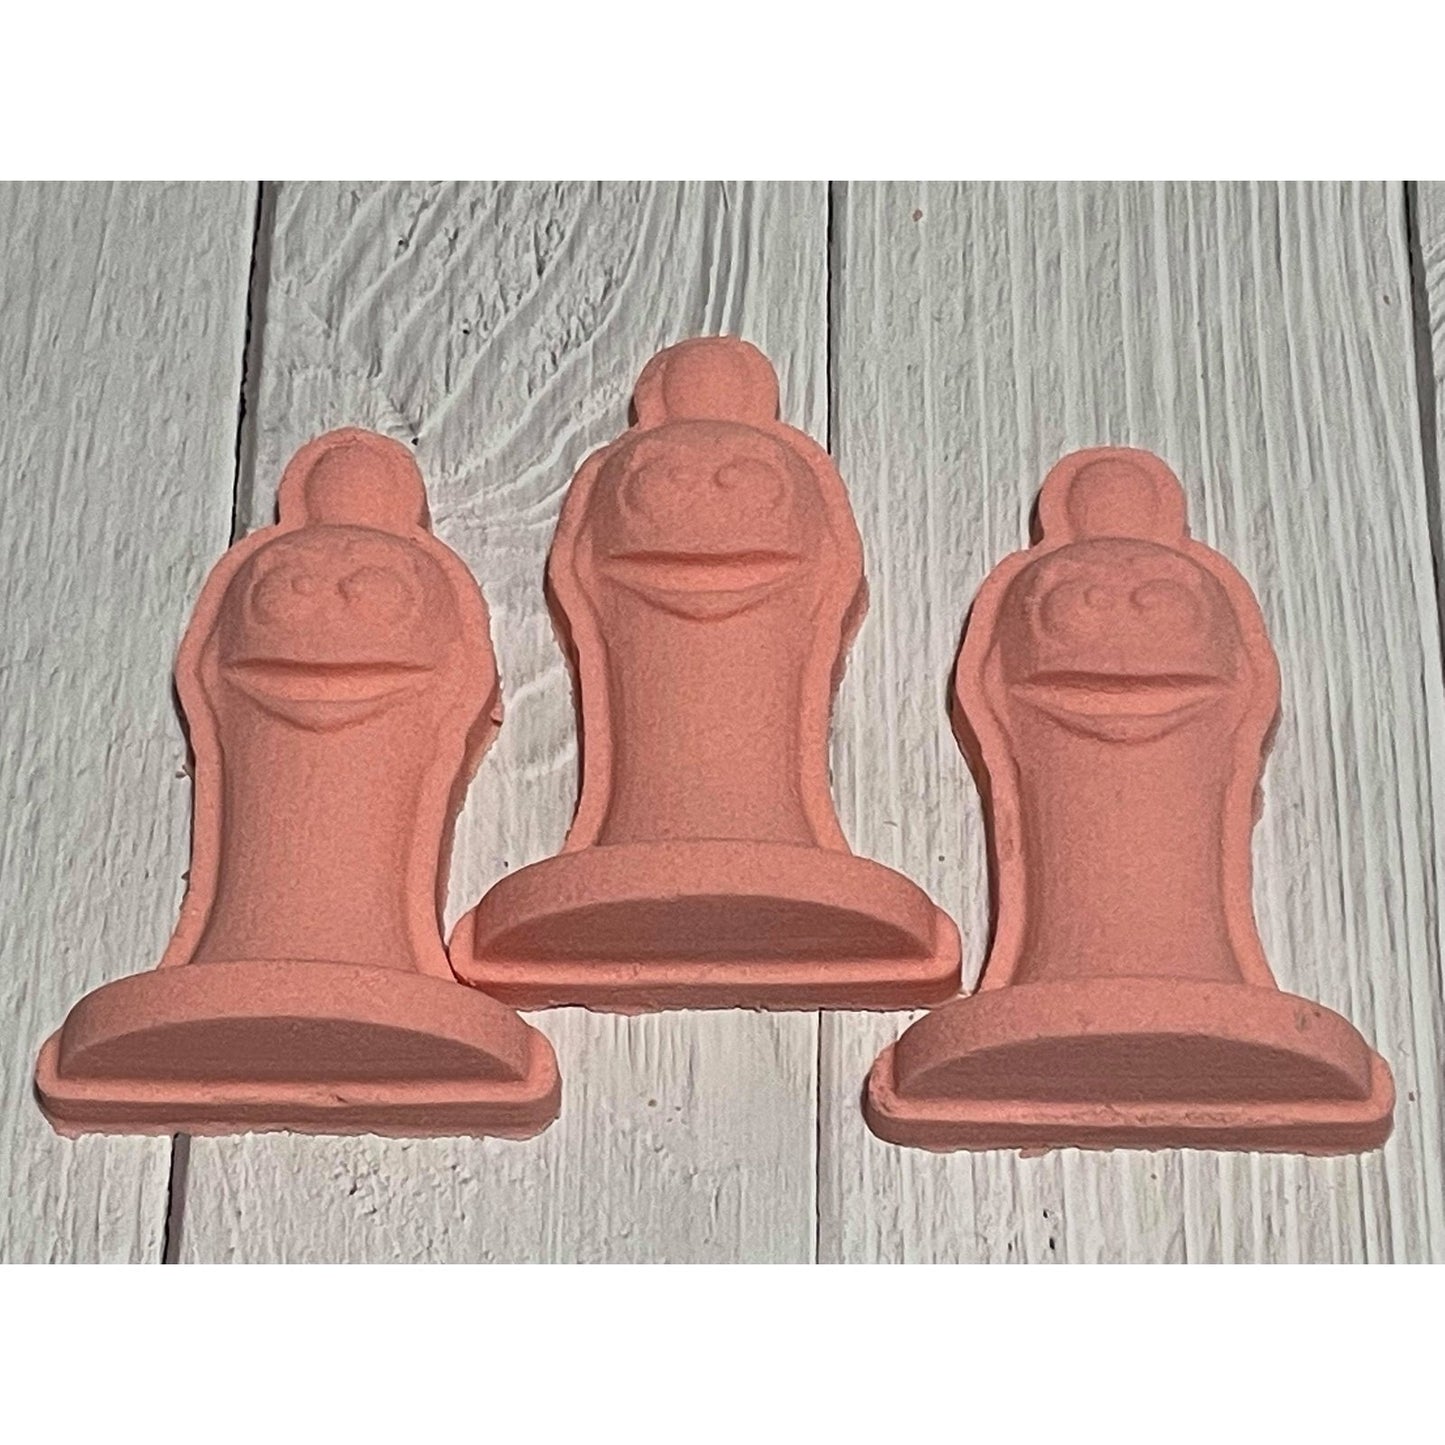 Mr. Happy Cover (Condom) Vacuum Form Molds